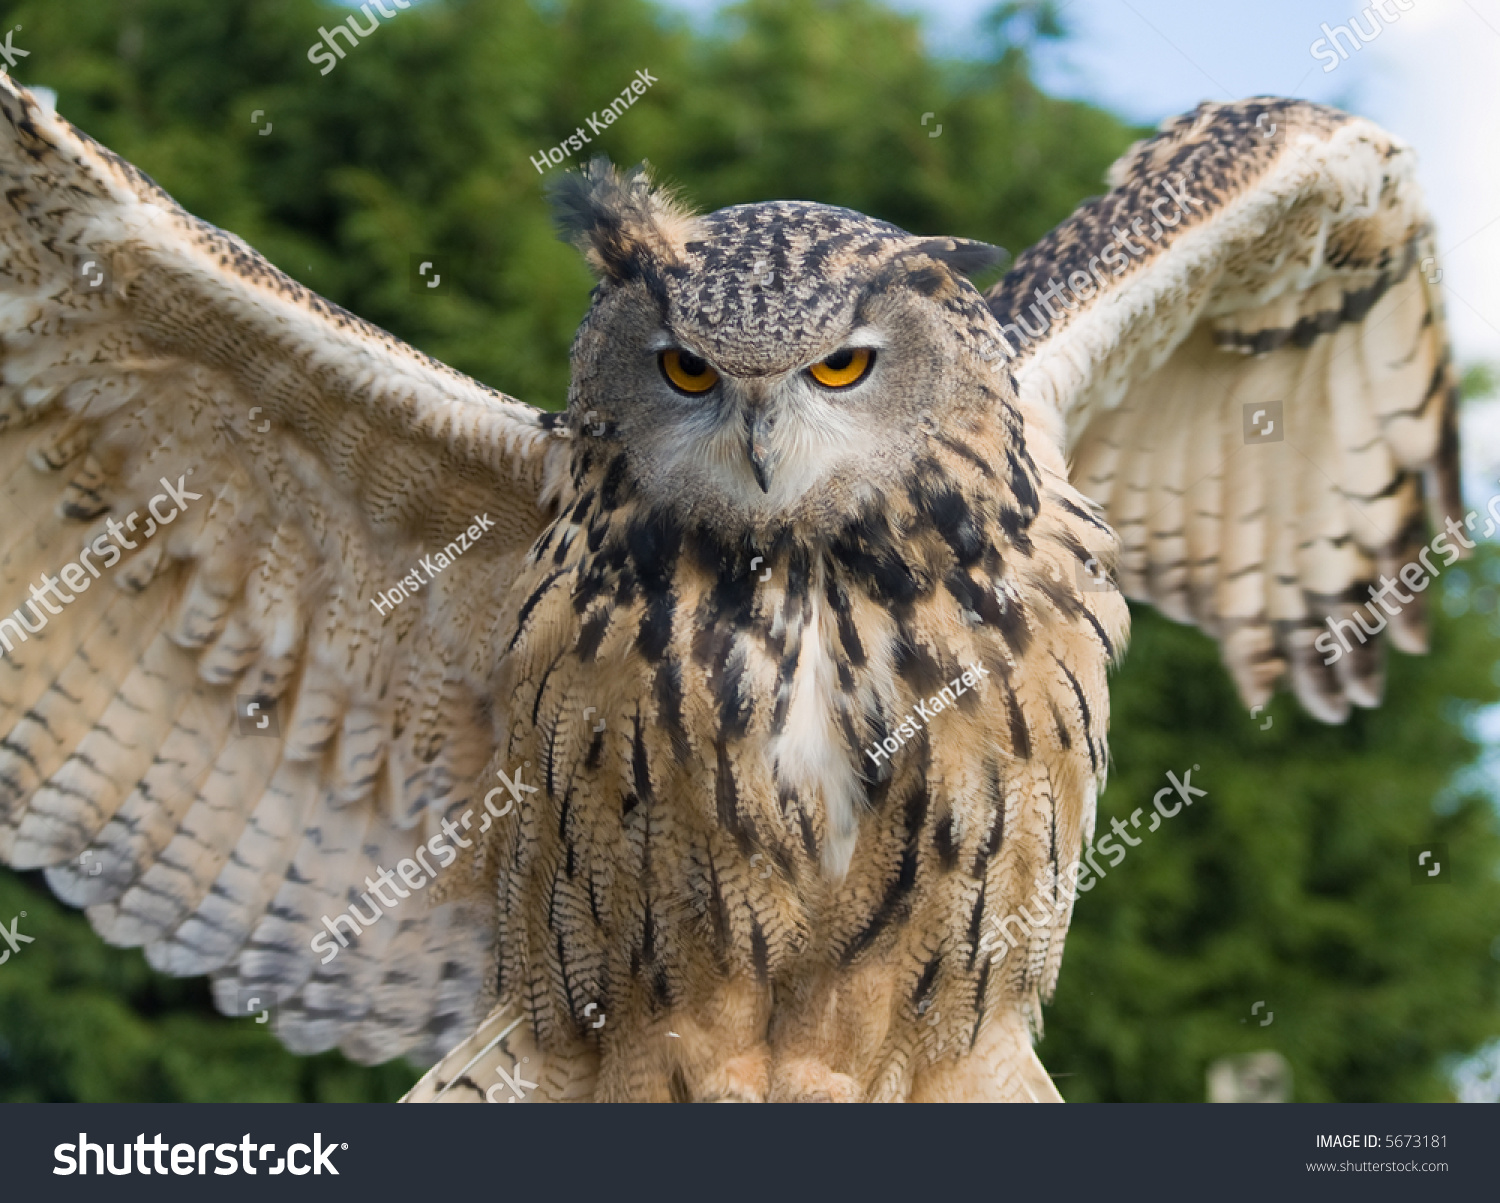 Eagle Owl Spreading Wings Stock Photo 5673181 - Shutterstock